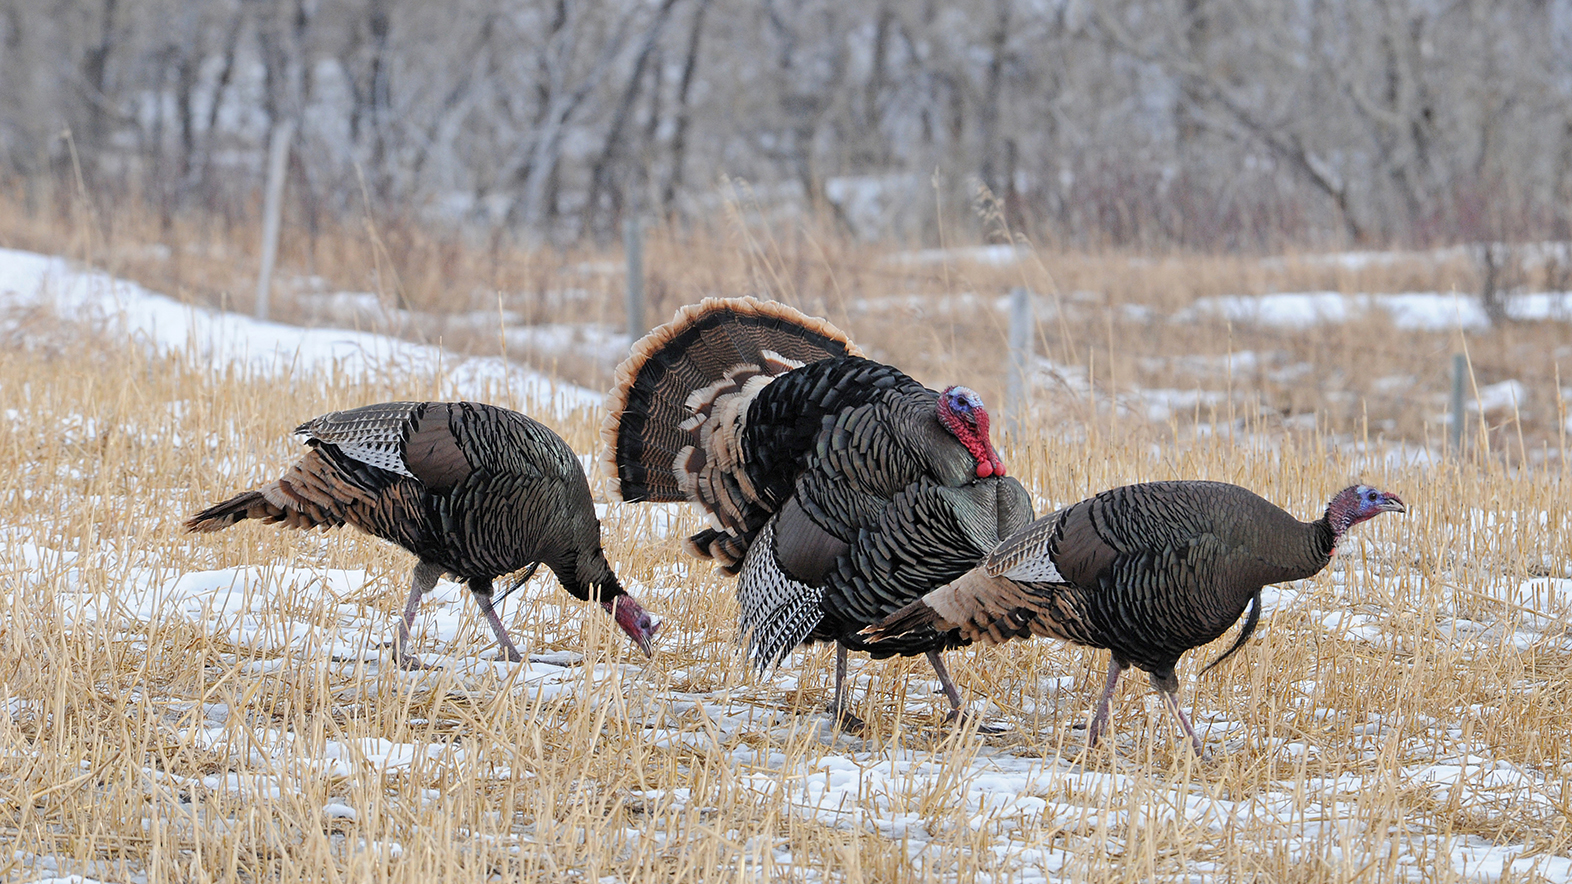 Huskerled study to focus on Nebraska’s wild turkey populations